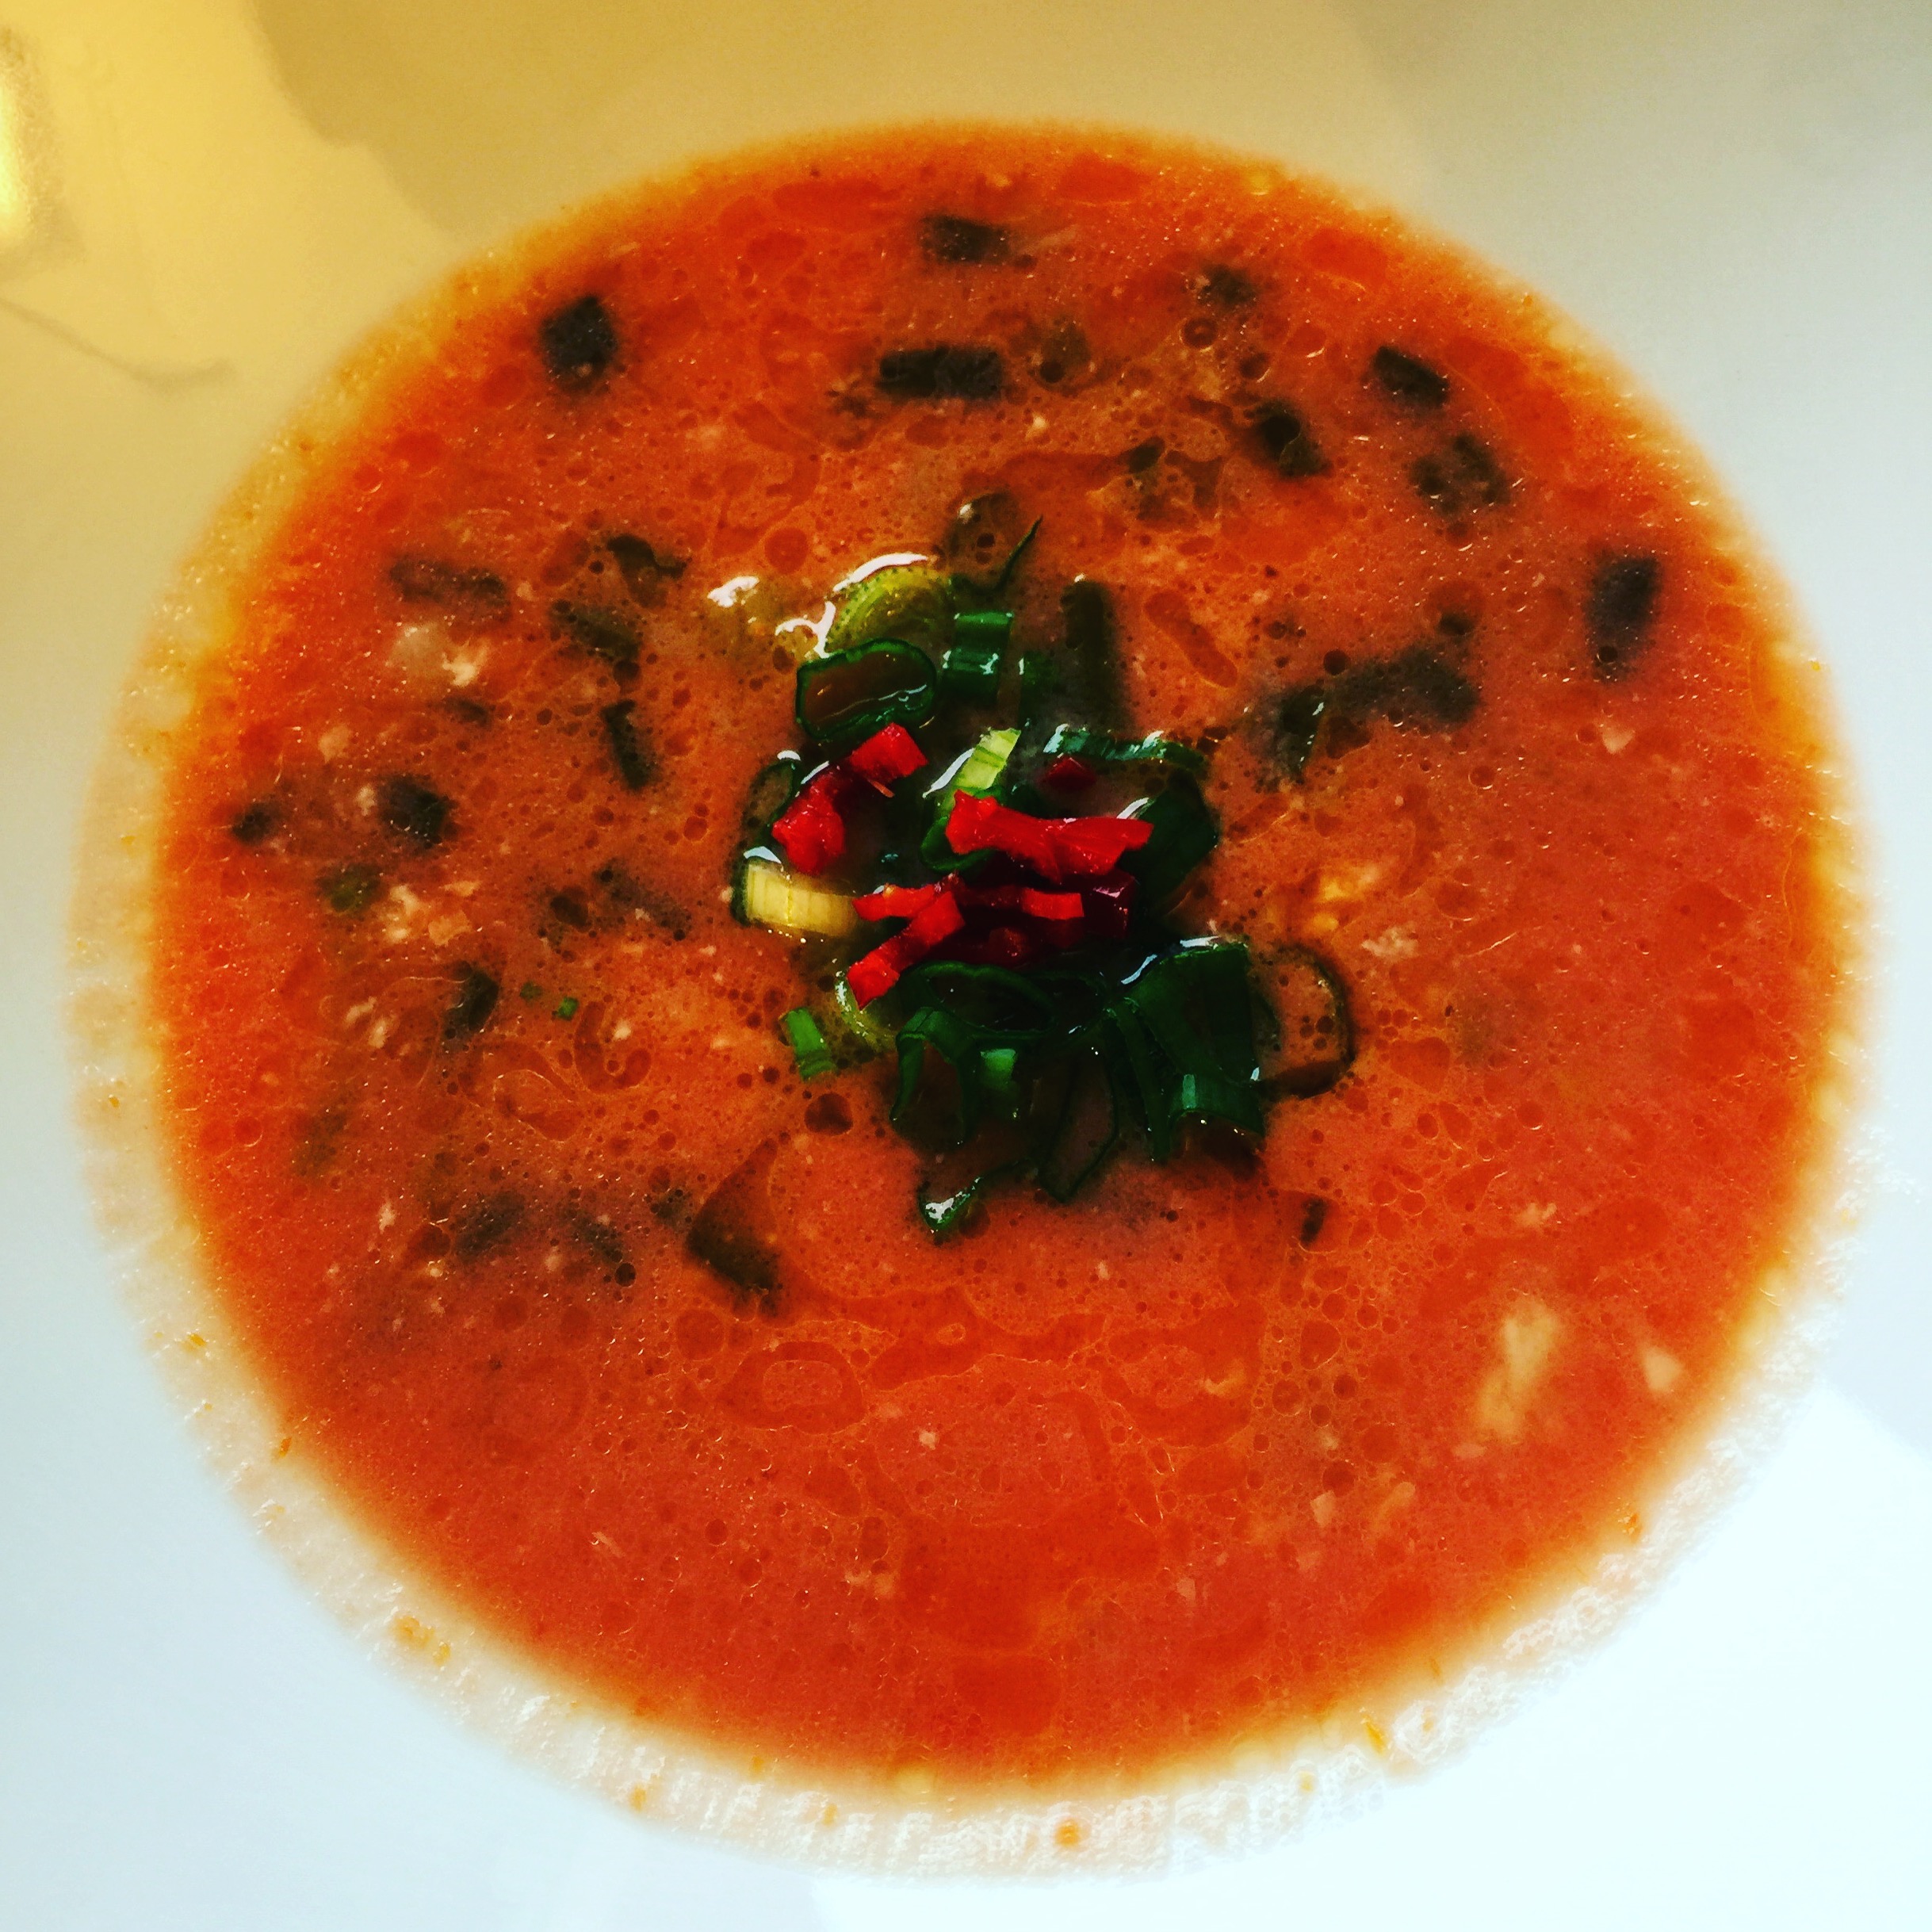 Tomaten-Kokos-Suppe mit Garnelen